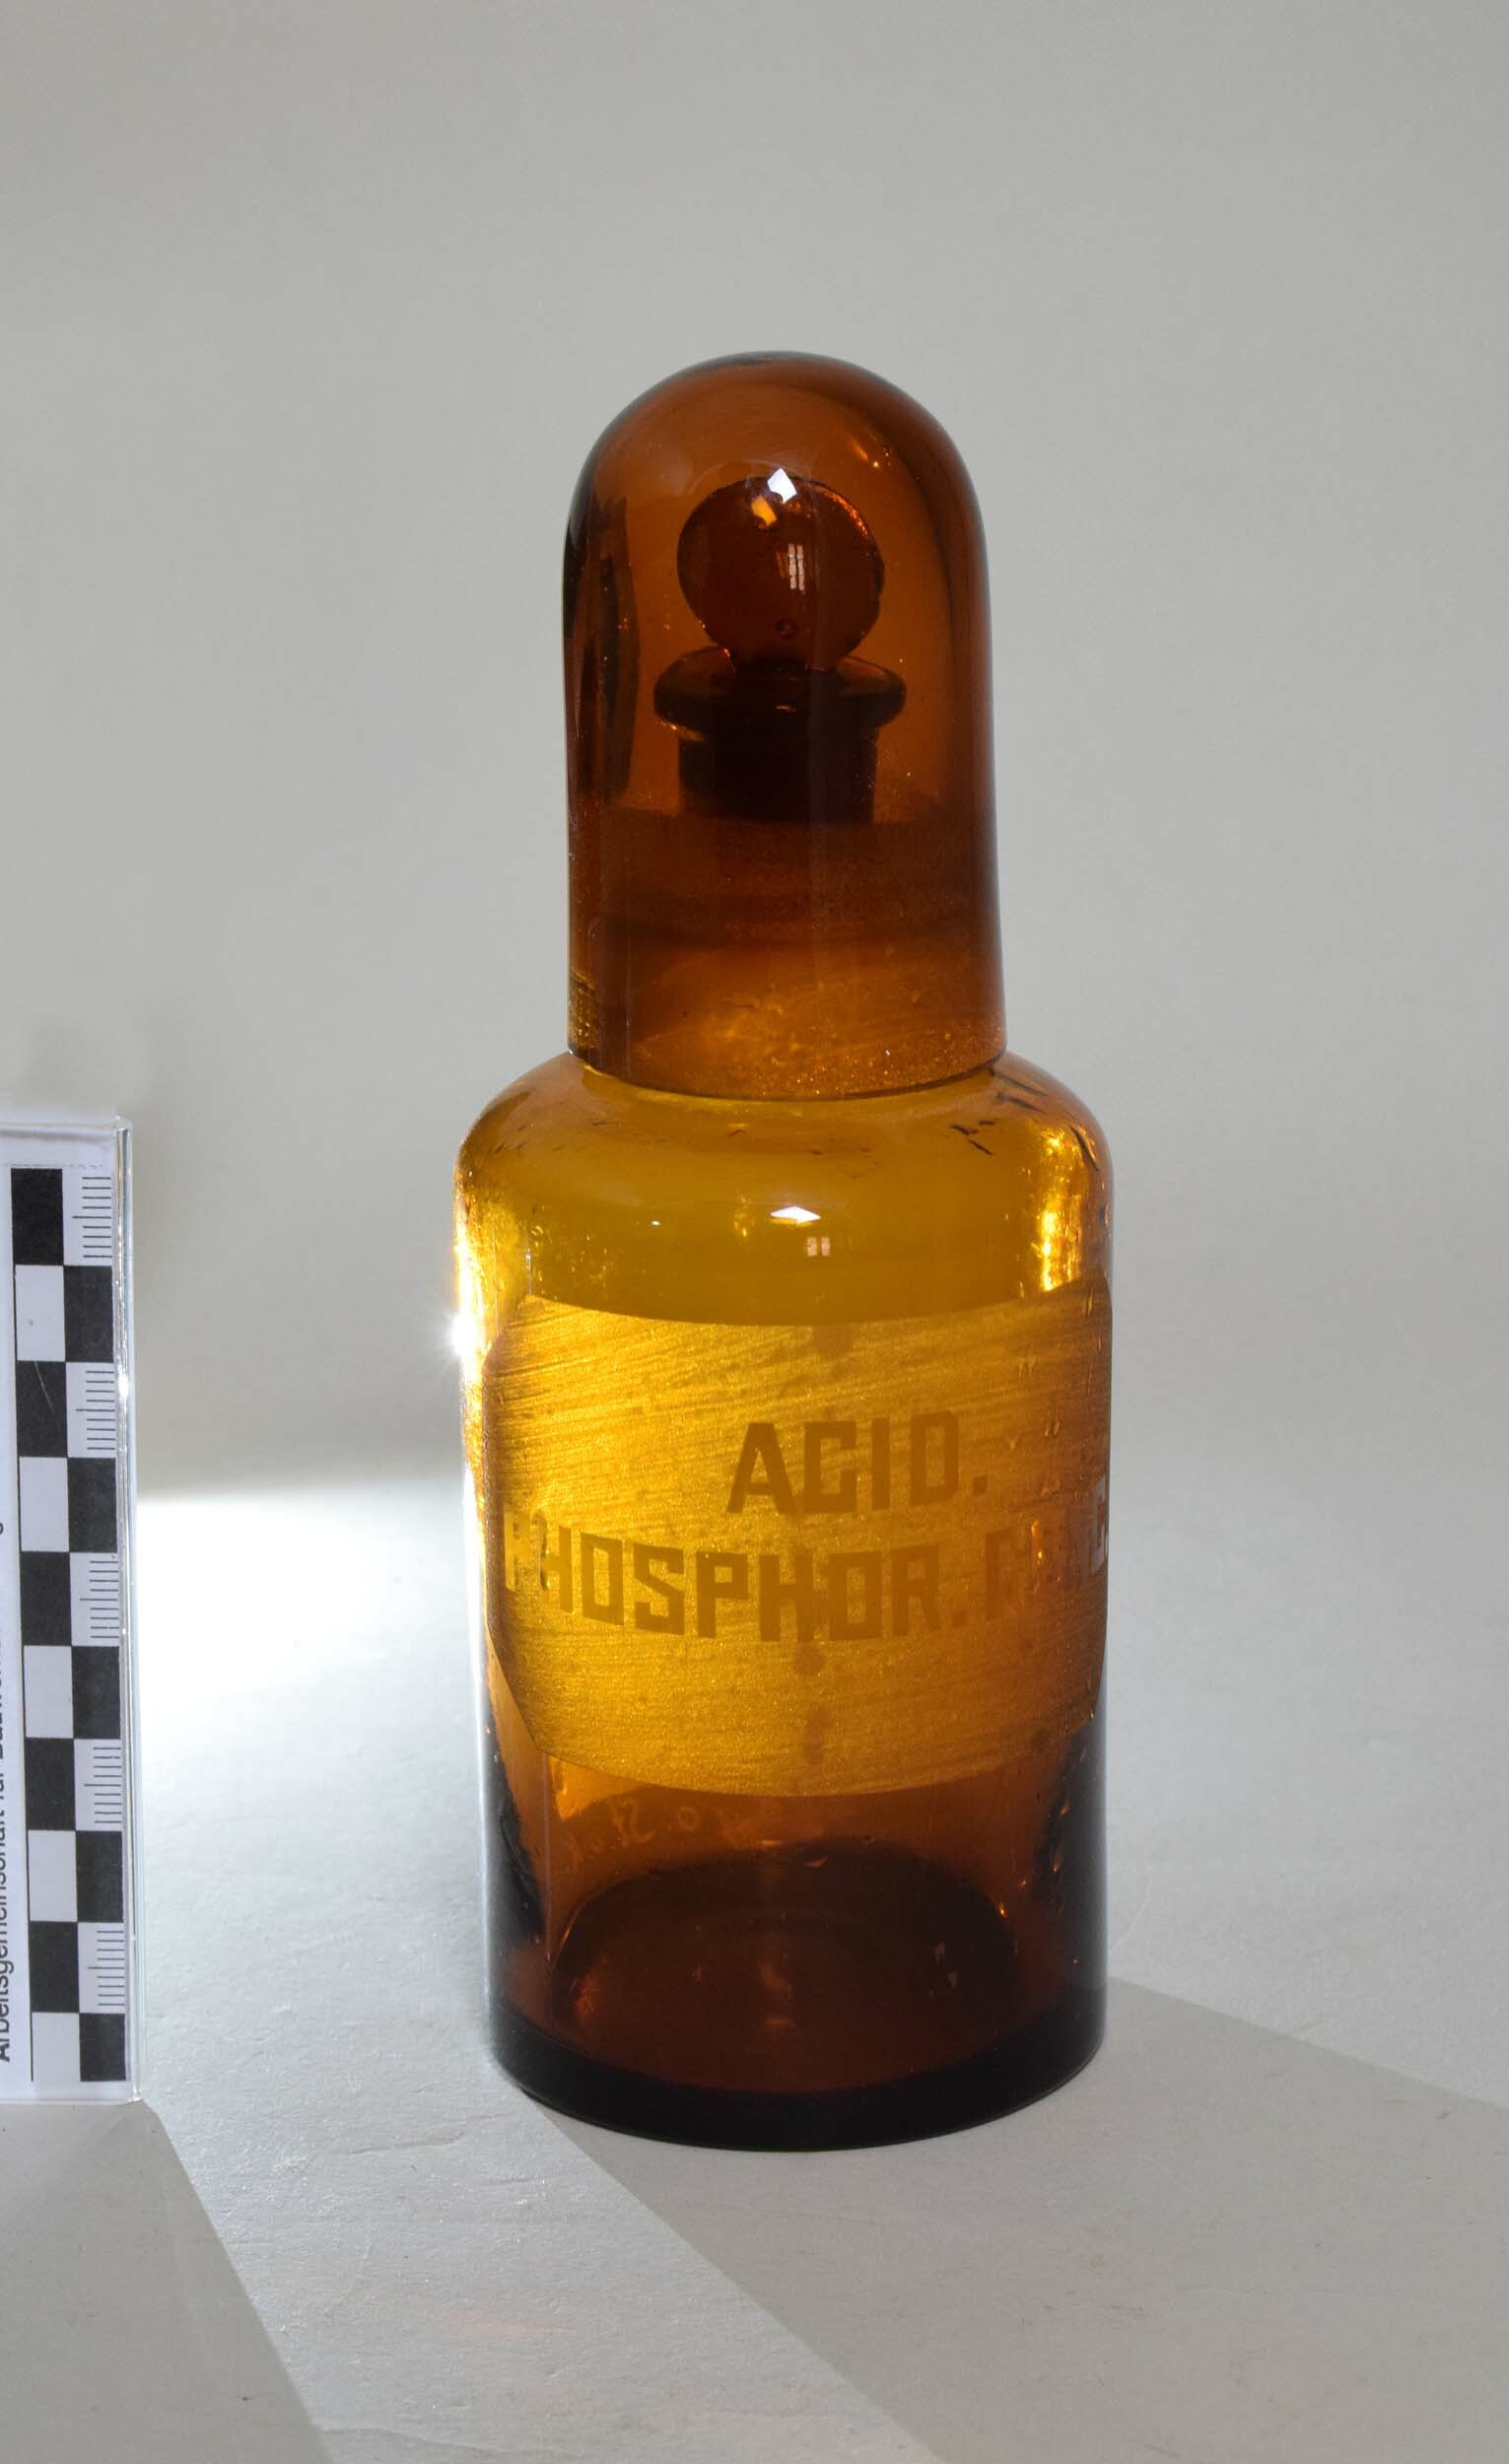 Apothekenflasche "Acid. phosphor. conc." (Phosphorsäure, konzentriert) (Heimatmuseum Dohna CC BY-NC-SA)